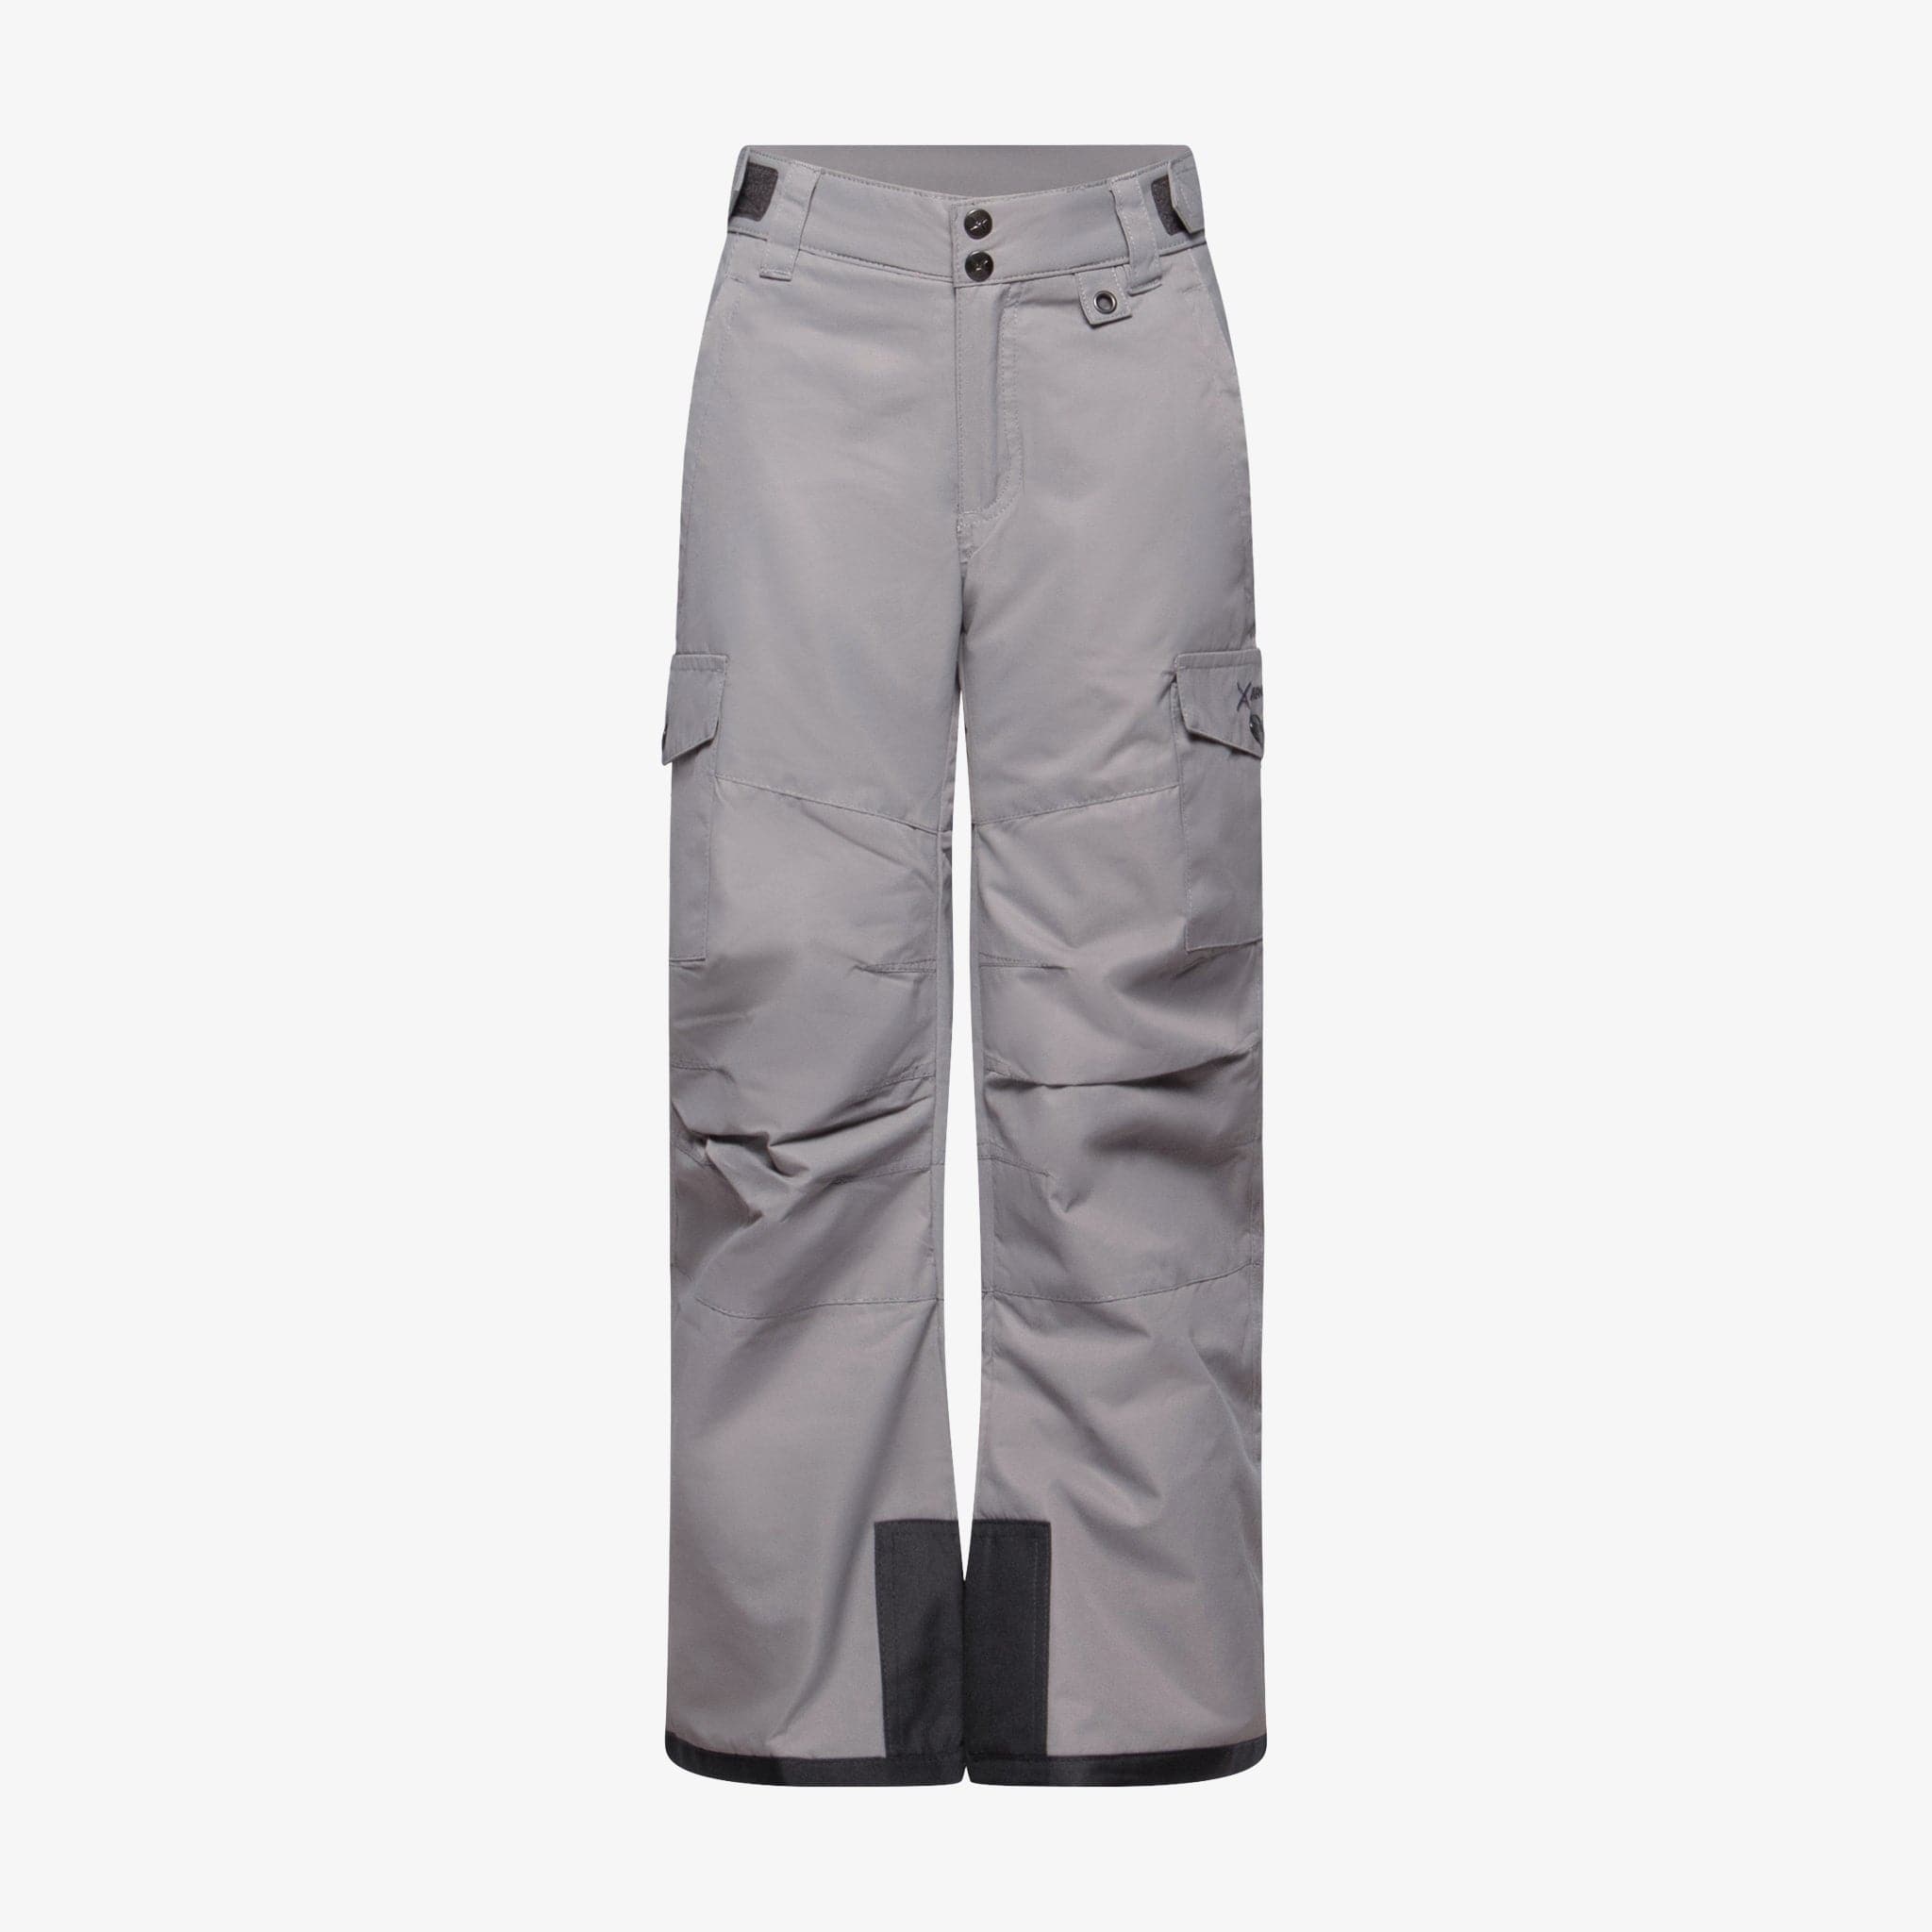 Arctix Black Snow Pants - Size 8 - Brand New!